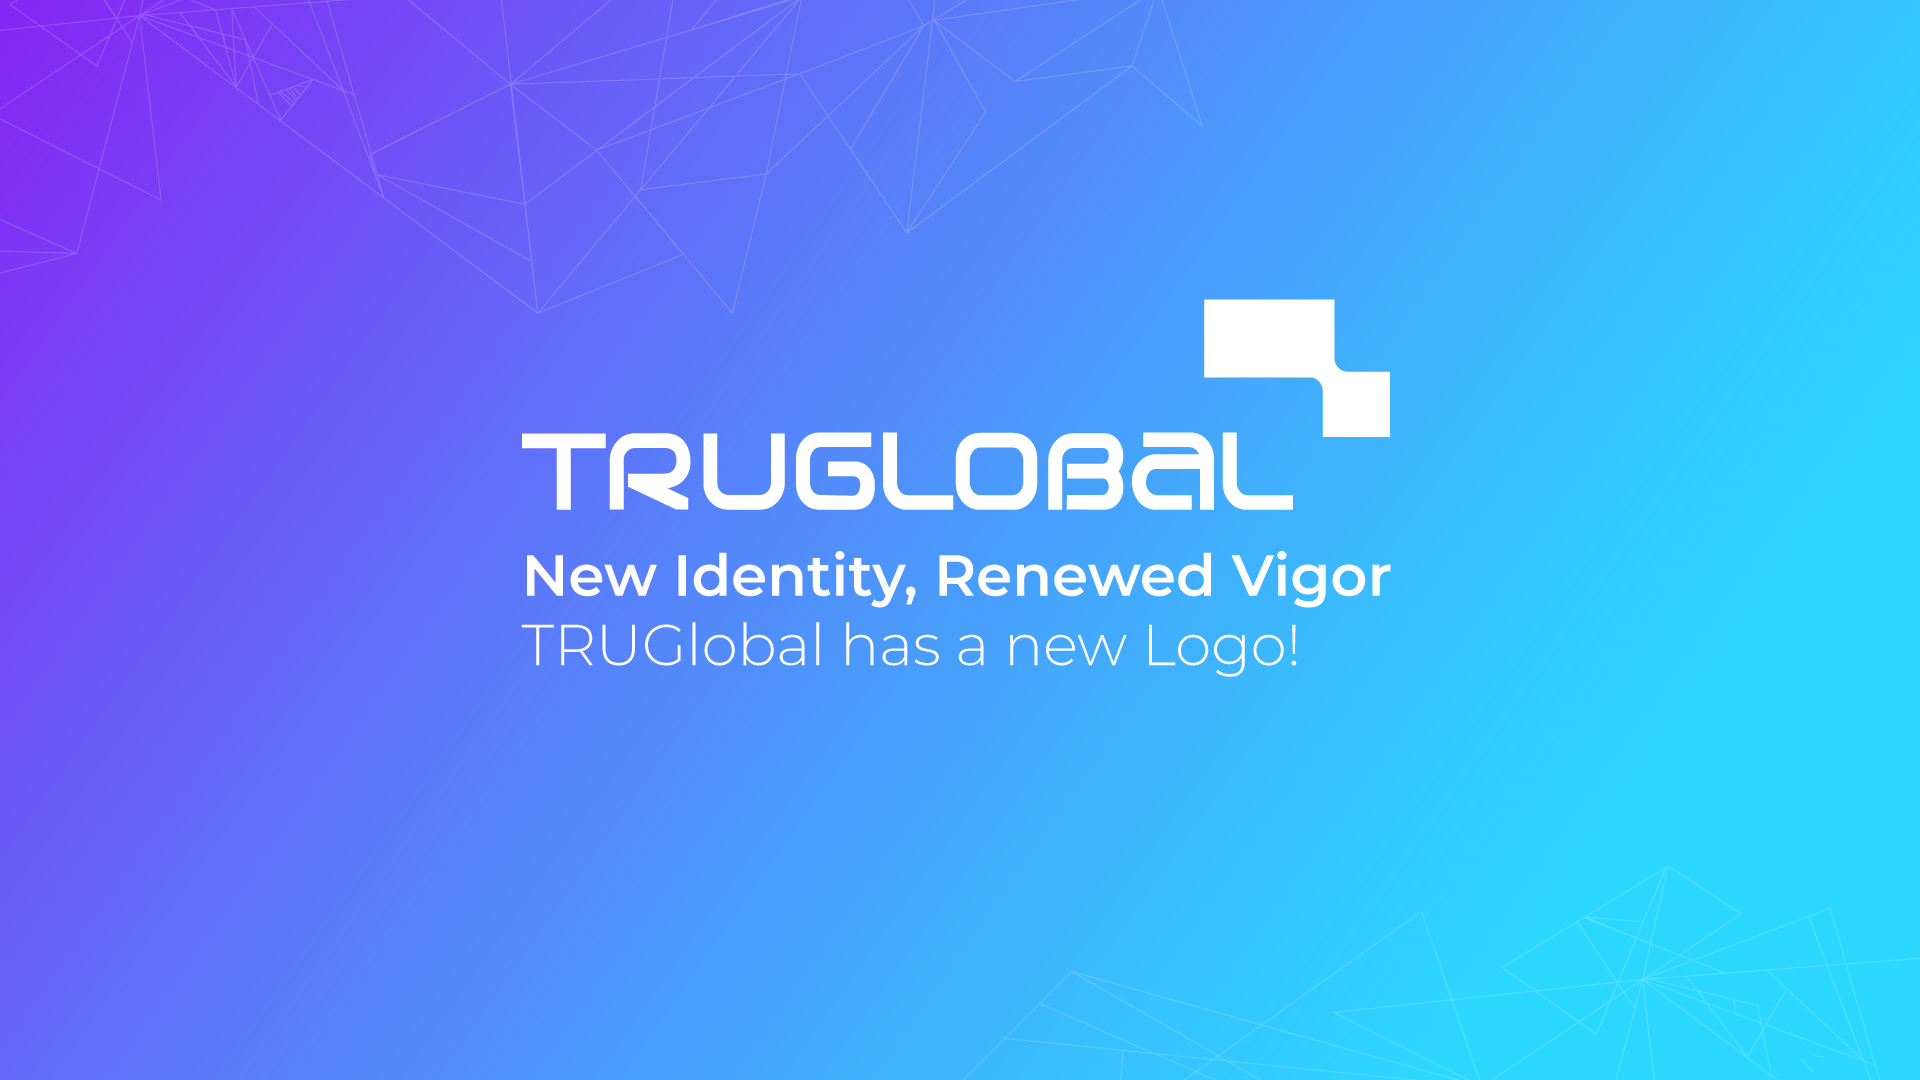 TRUGlobal - New Identity, Renewed Vigor